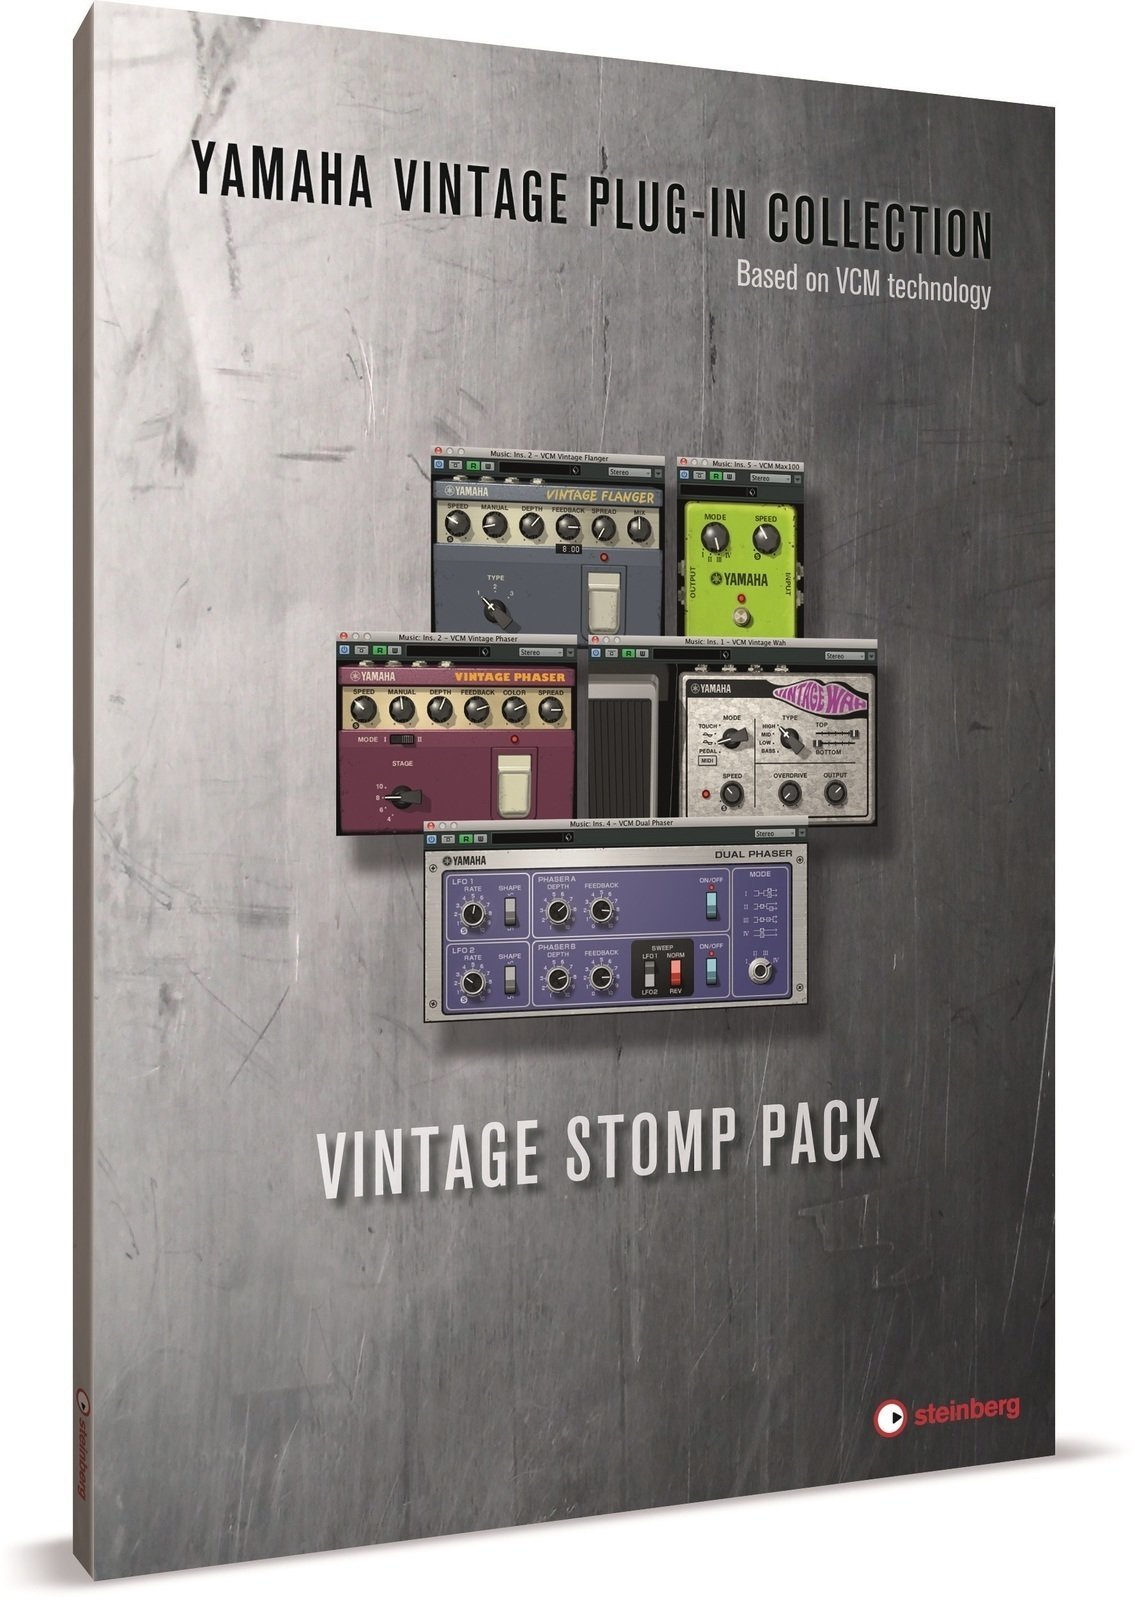 Instrument virtuel Steinberg Vintage Stomp Pack